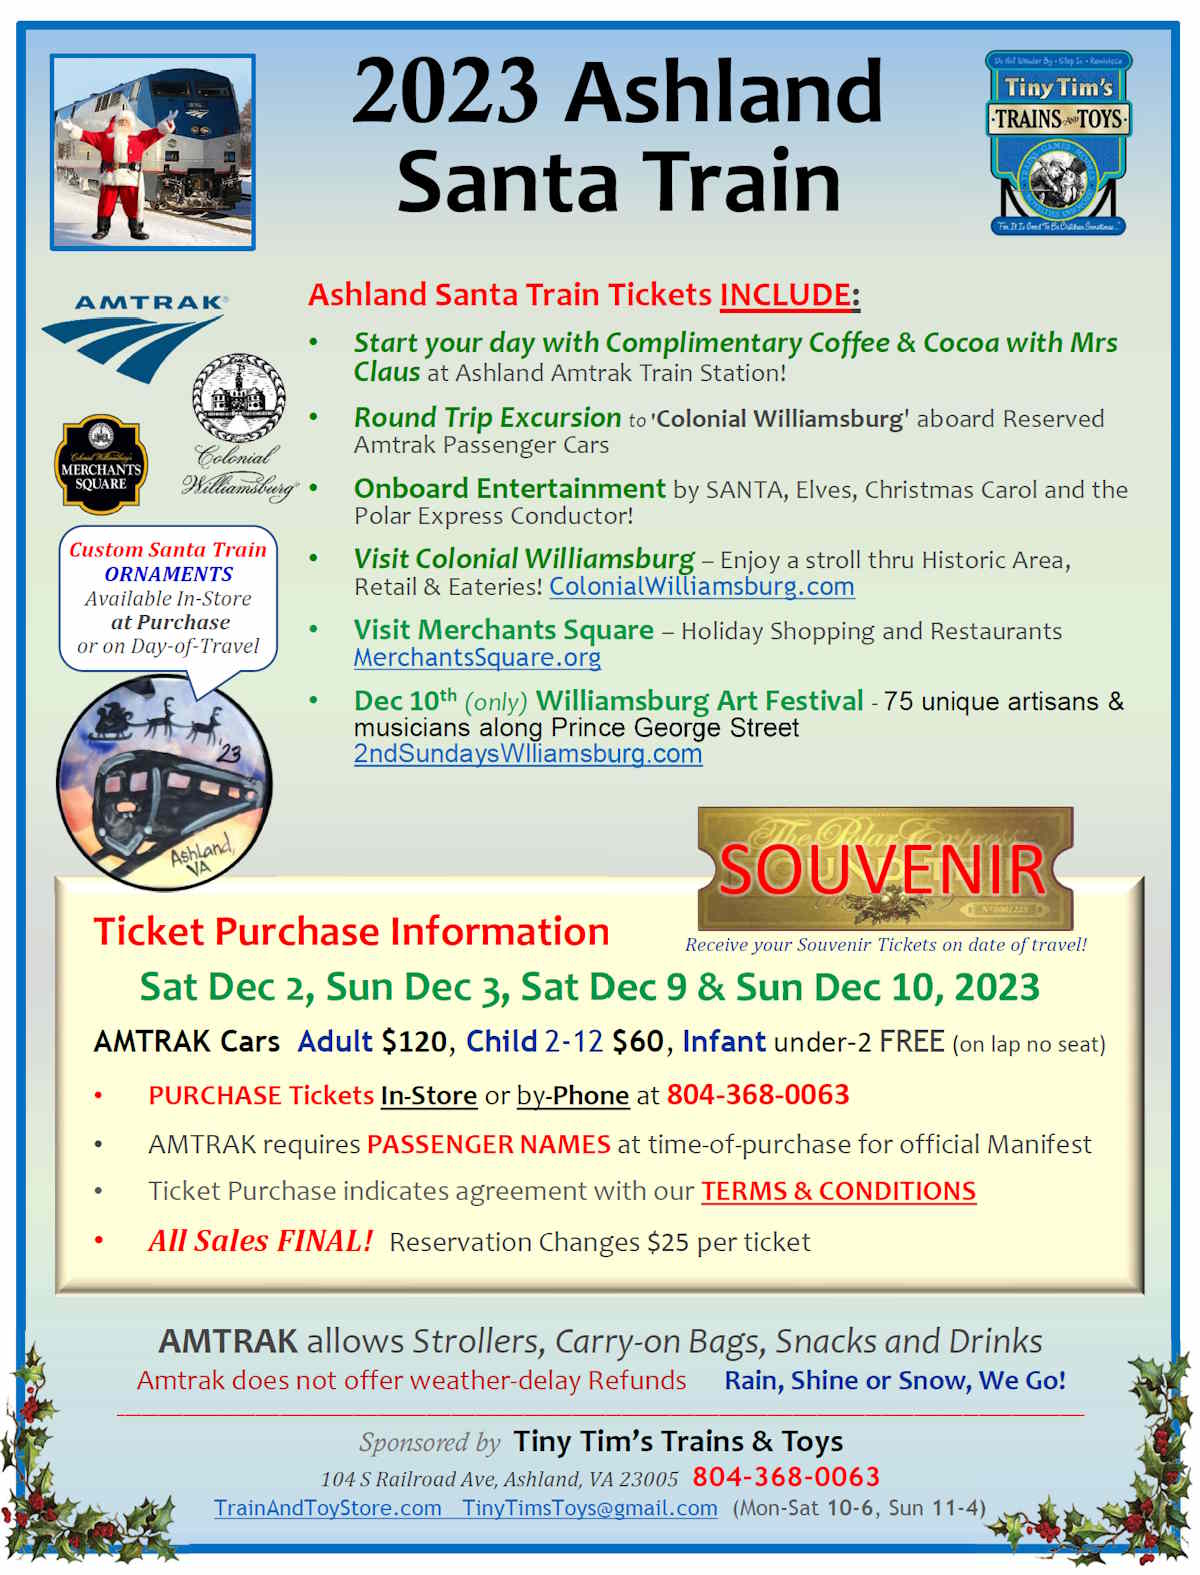 2023 Santa Train Ashland, VA